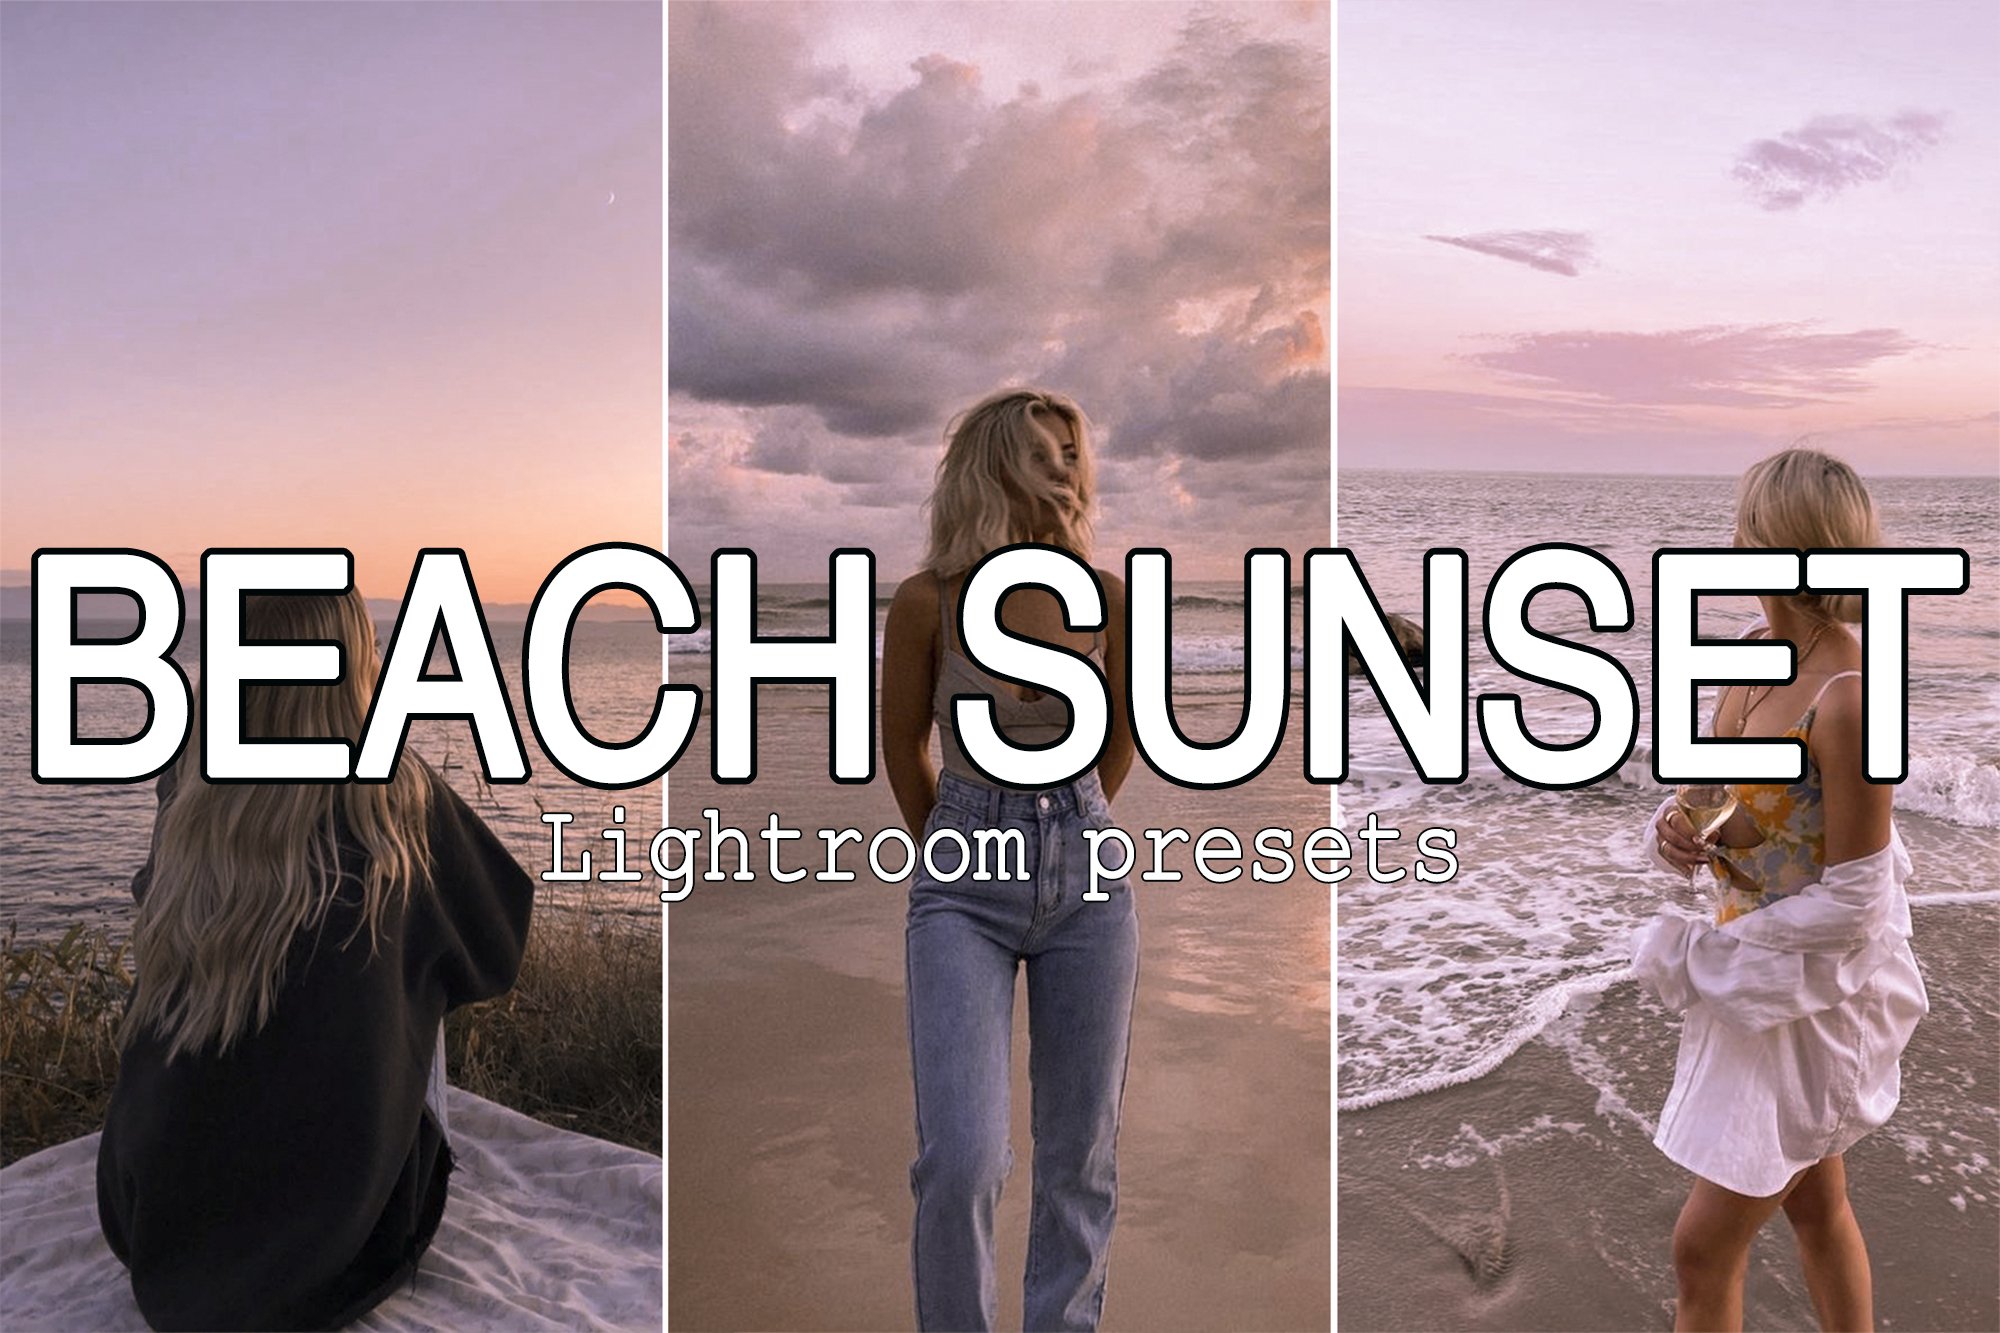 6 Beach Sunset Lightroom Presetscover image.